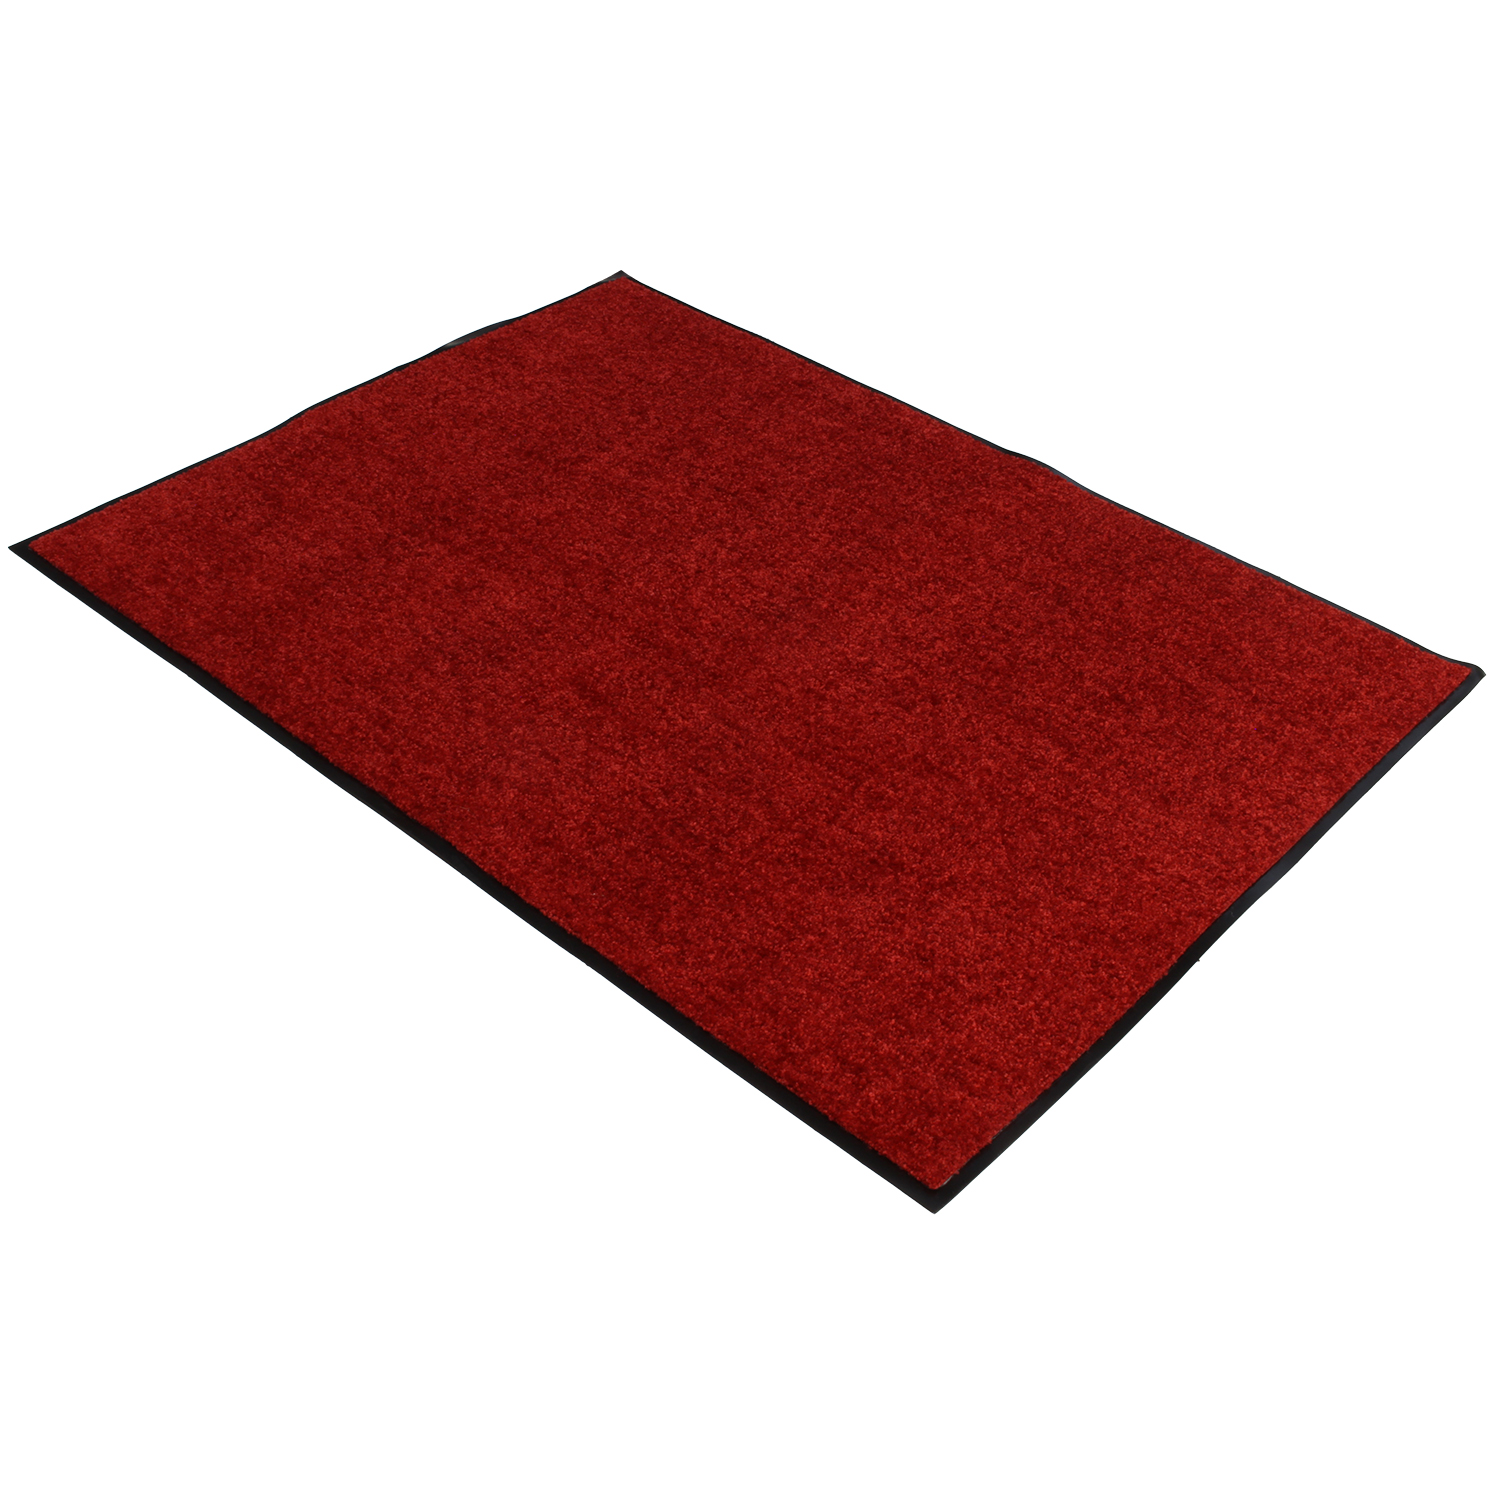 Droogloopmat - Rood - 90 x 120 cm - Rubberren onderrug - 1,5 cm rand - Wash & Clean